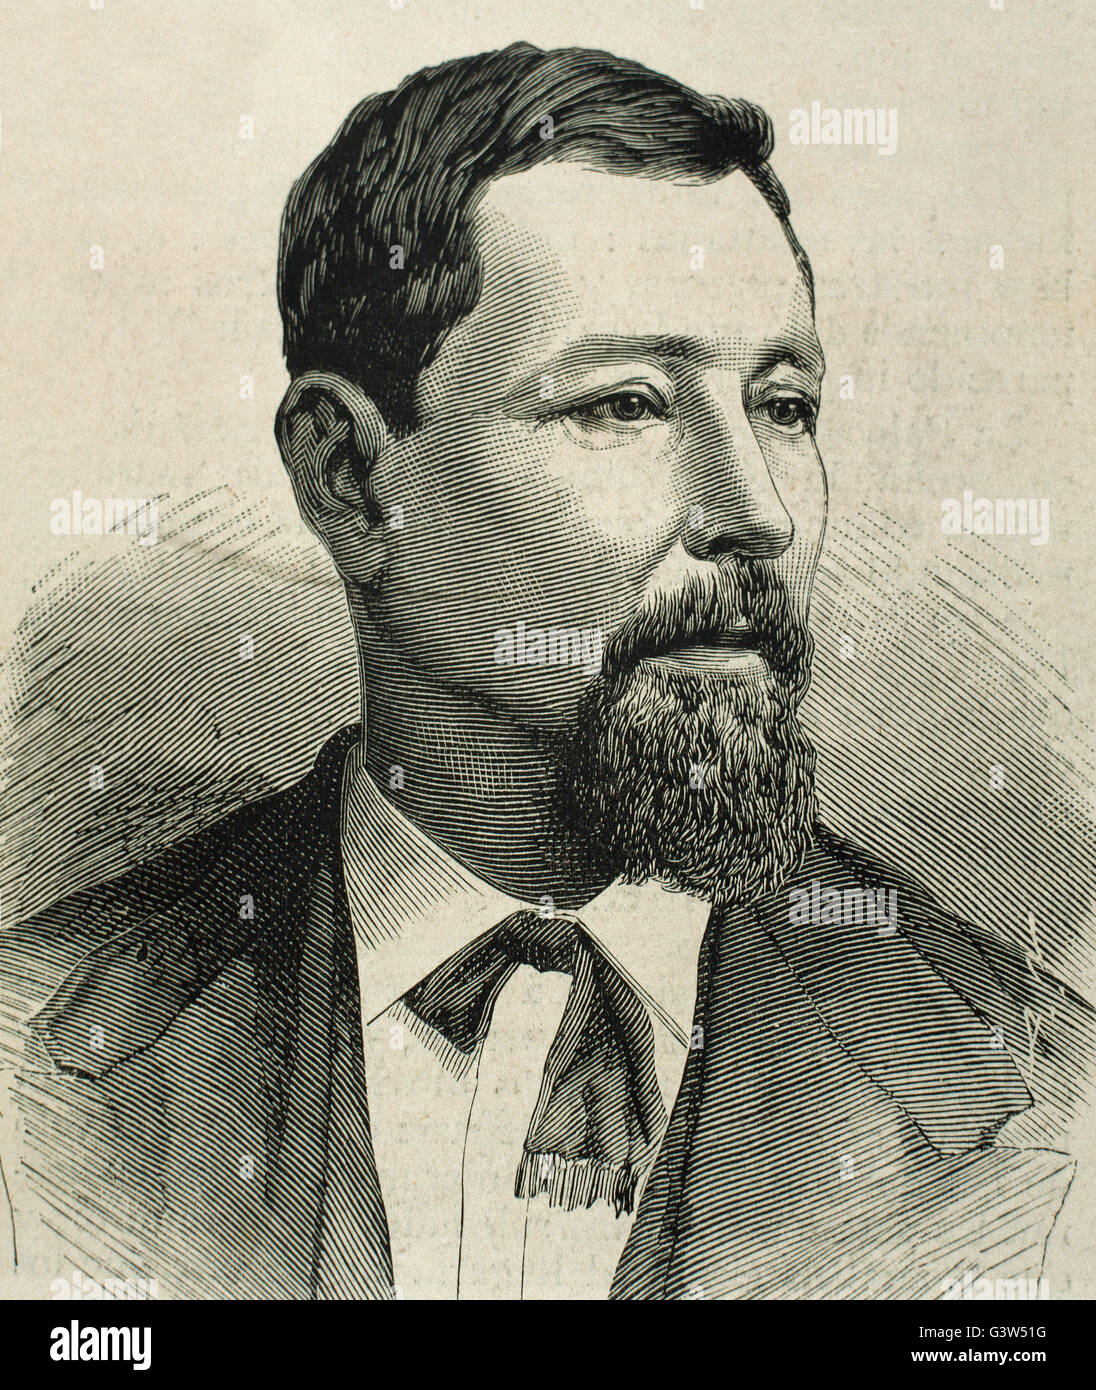 Justo Rufino Barrios (1835-1885). Guatemalan military and politician. President of Guatemala (1873-1885). Portrait. Engraving, 19th century. Stock Photo